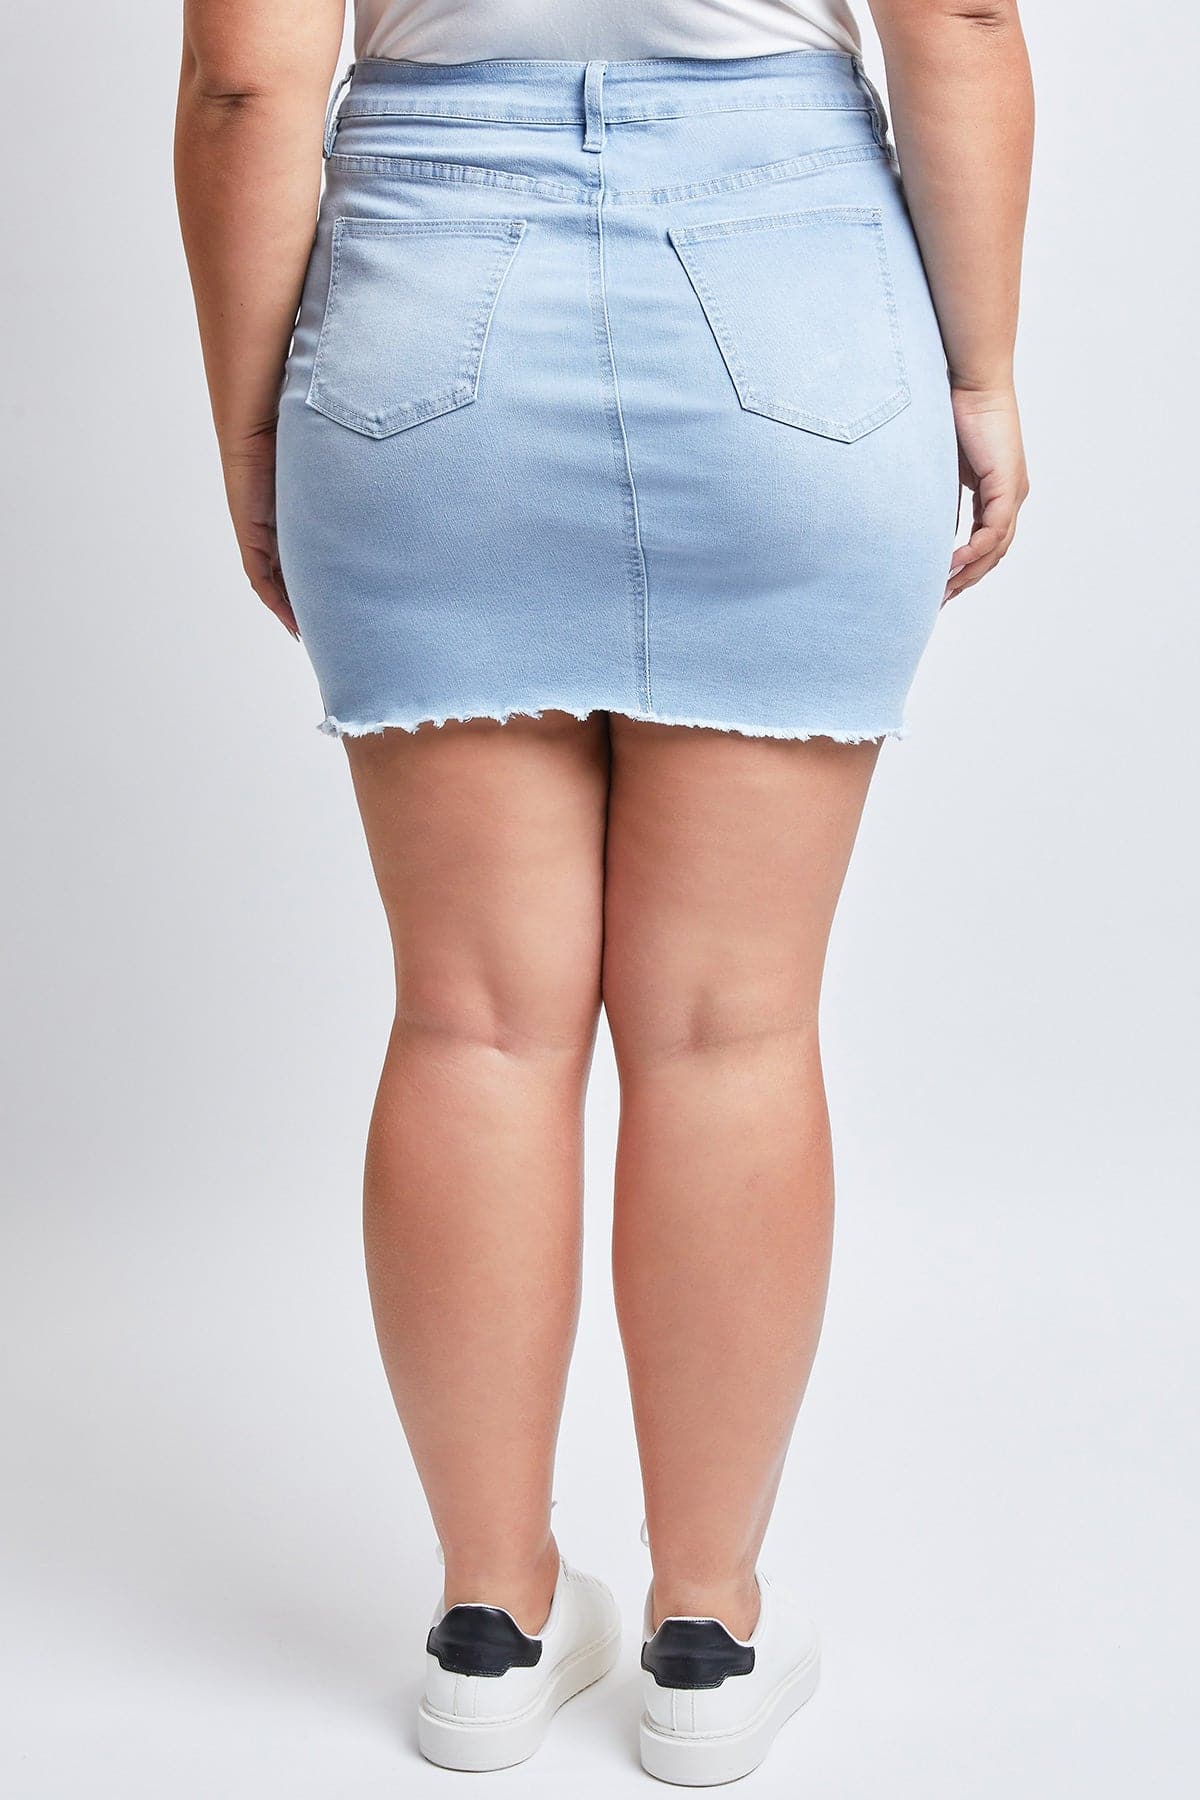 Plus Size Women's Exposed Button Fray Hem Skirt